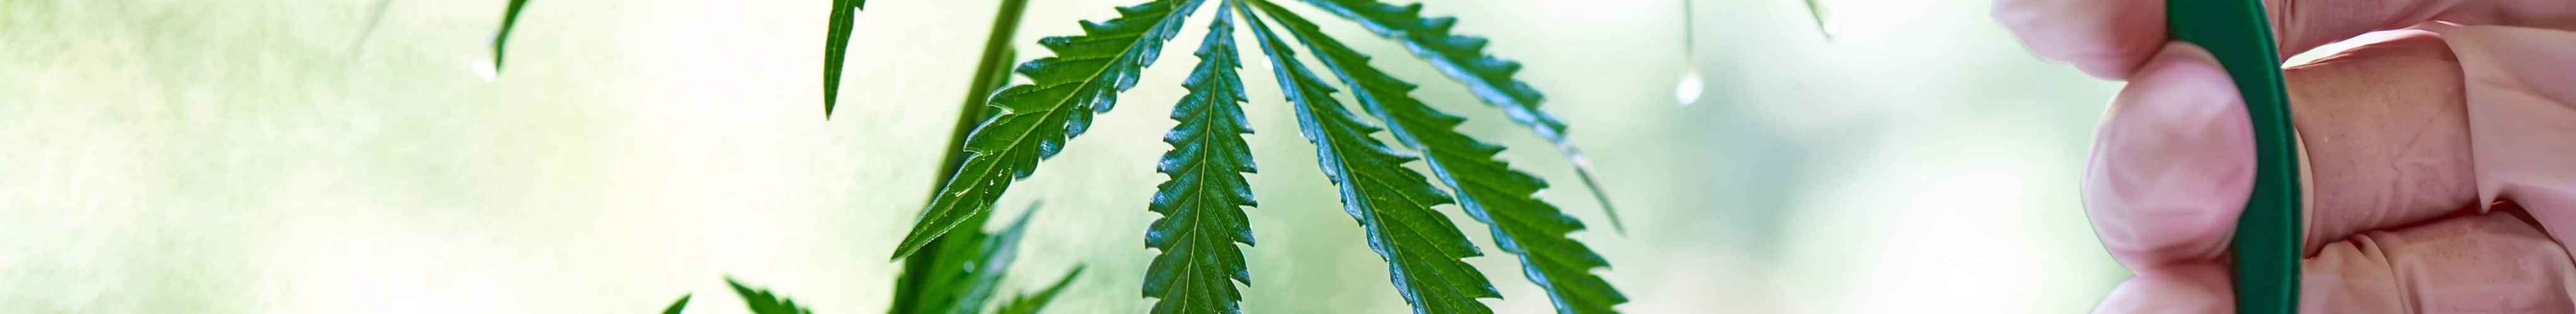 organic growing cannabis